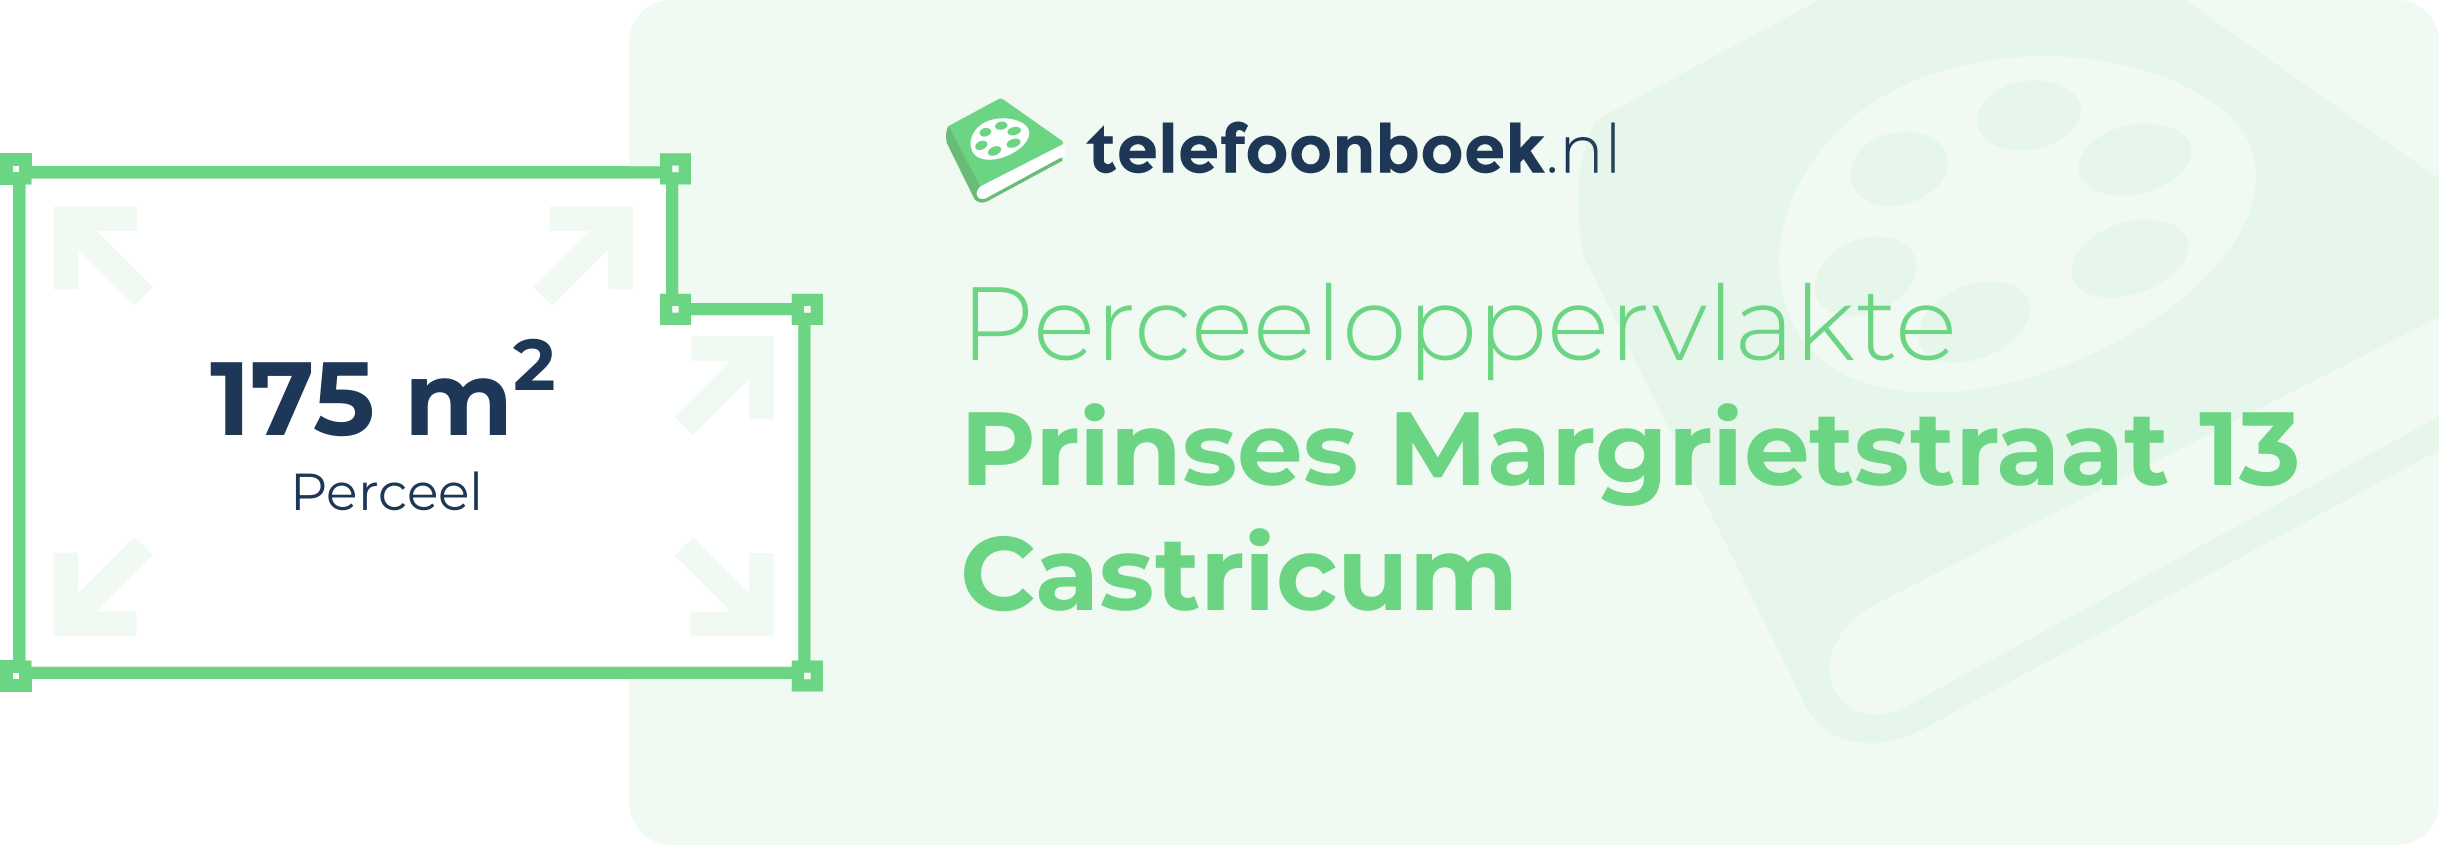 Perceeloppervlakte Prinses Margrietstraat 13 Castricum